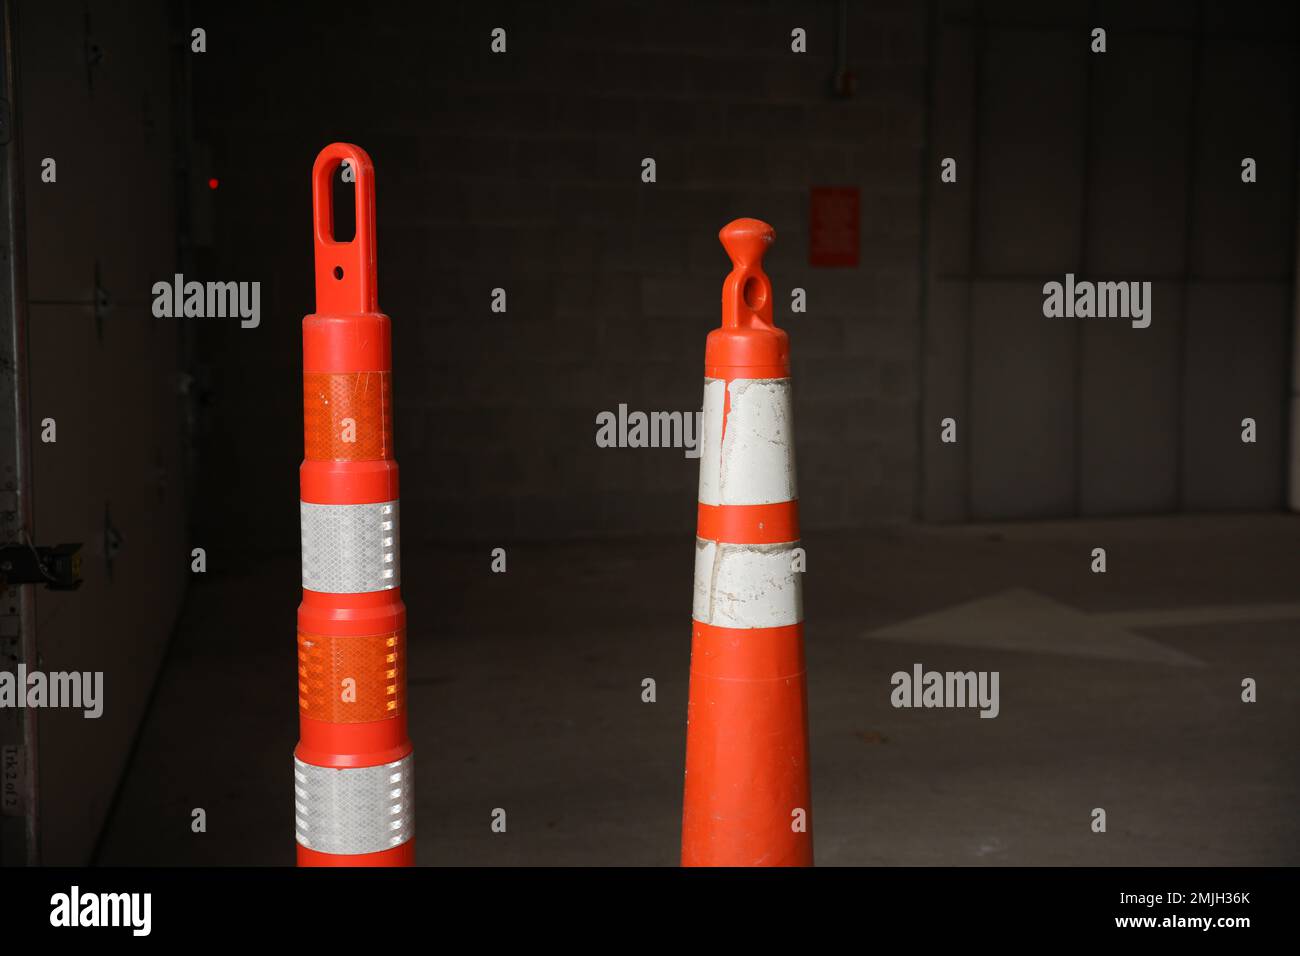 construction cones middle of street roadblock danger orange Stock Photo